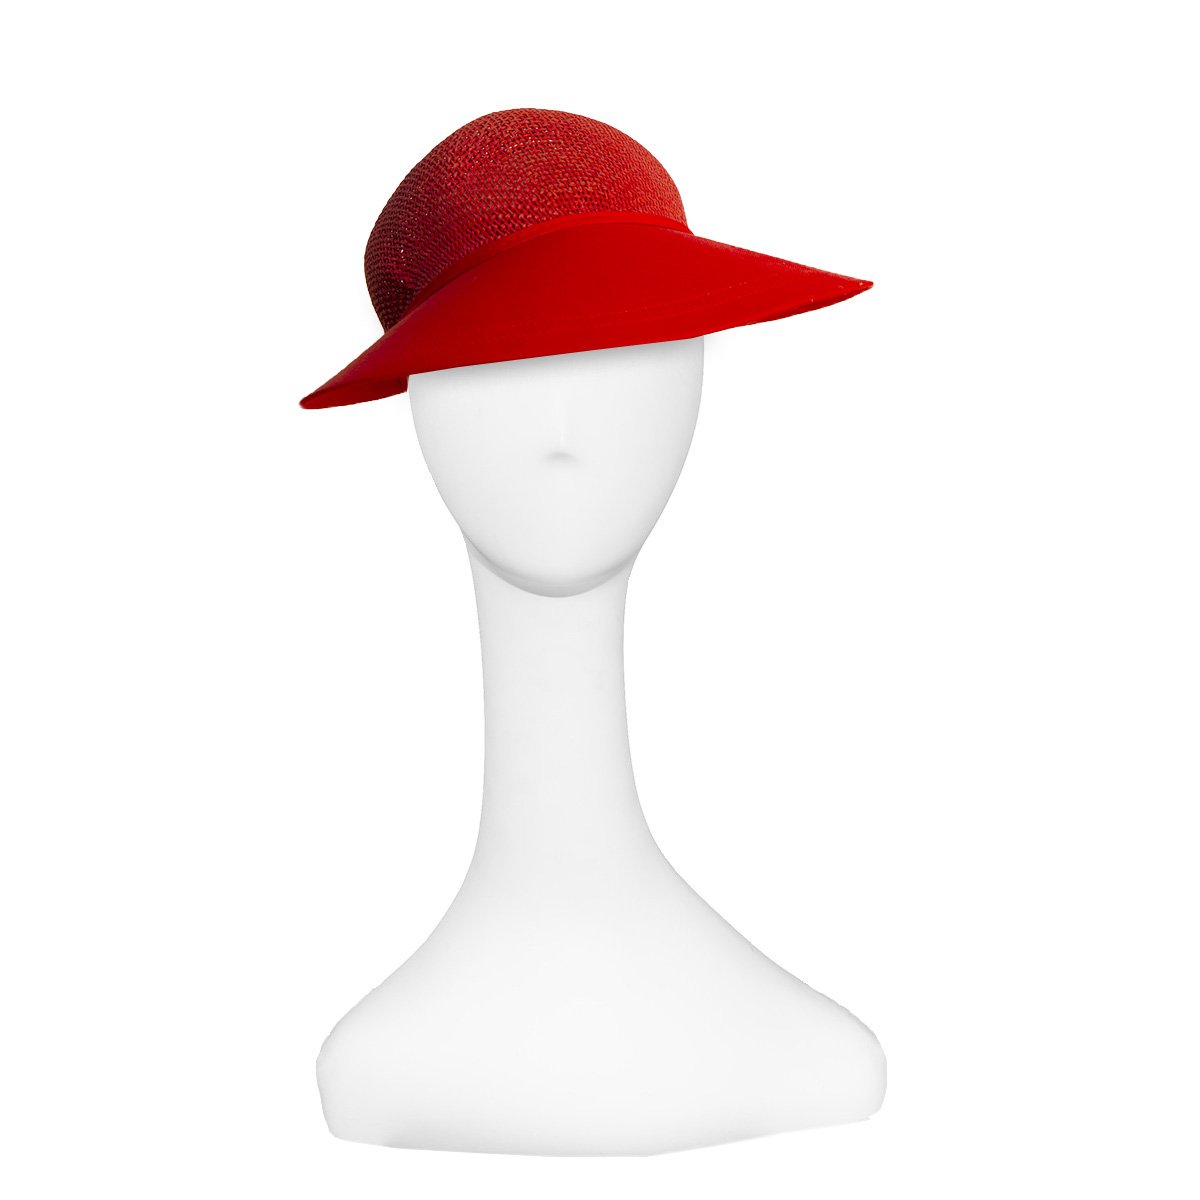 Ladies Red Straw Visor Cap, Fits Most